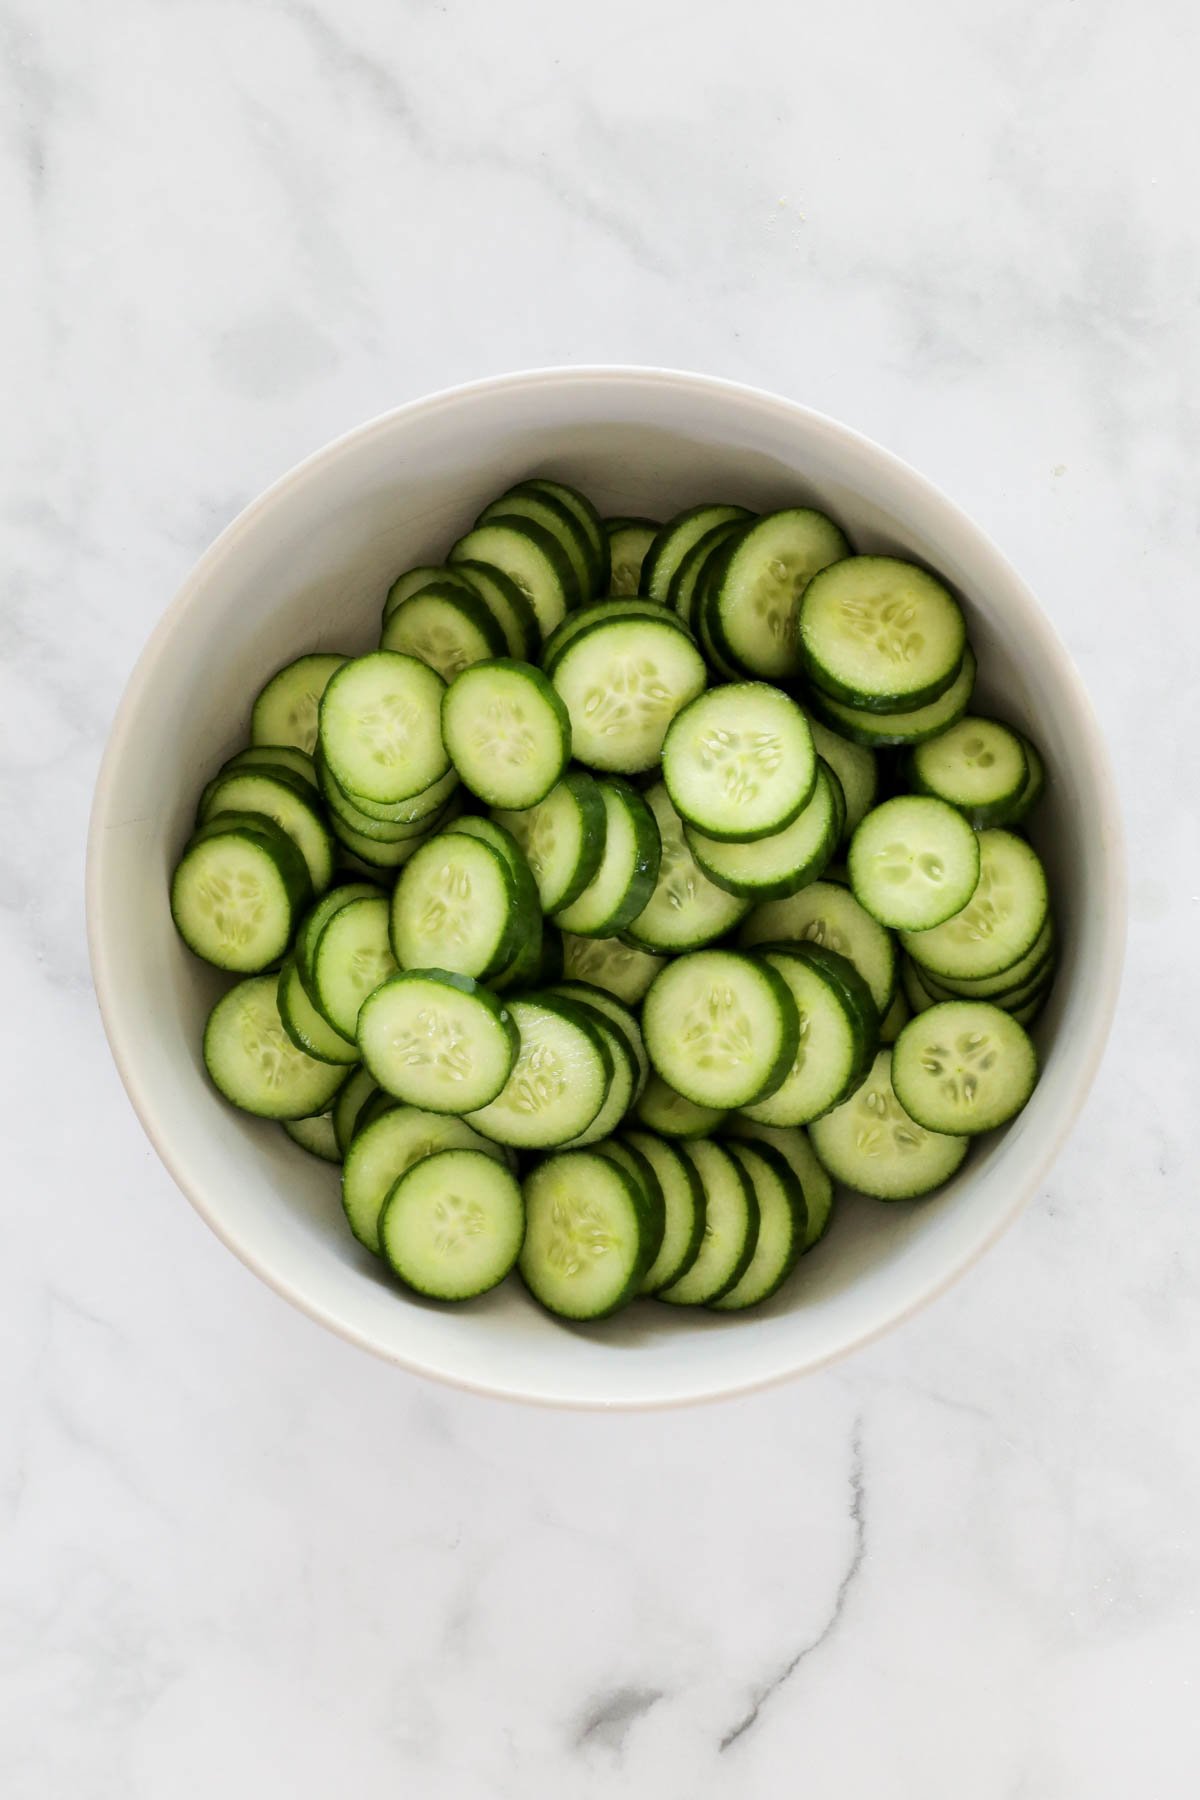 Sliced cucumbers in a bowl.